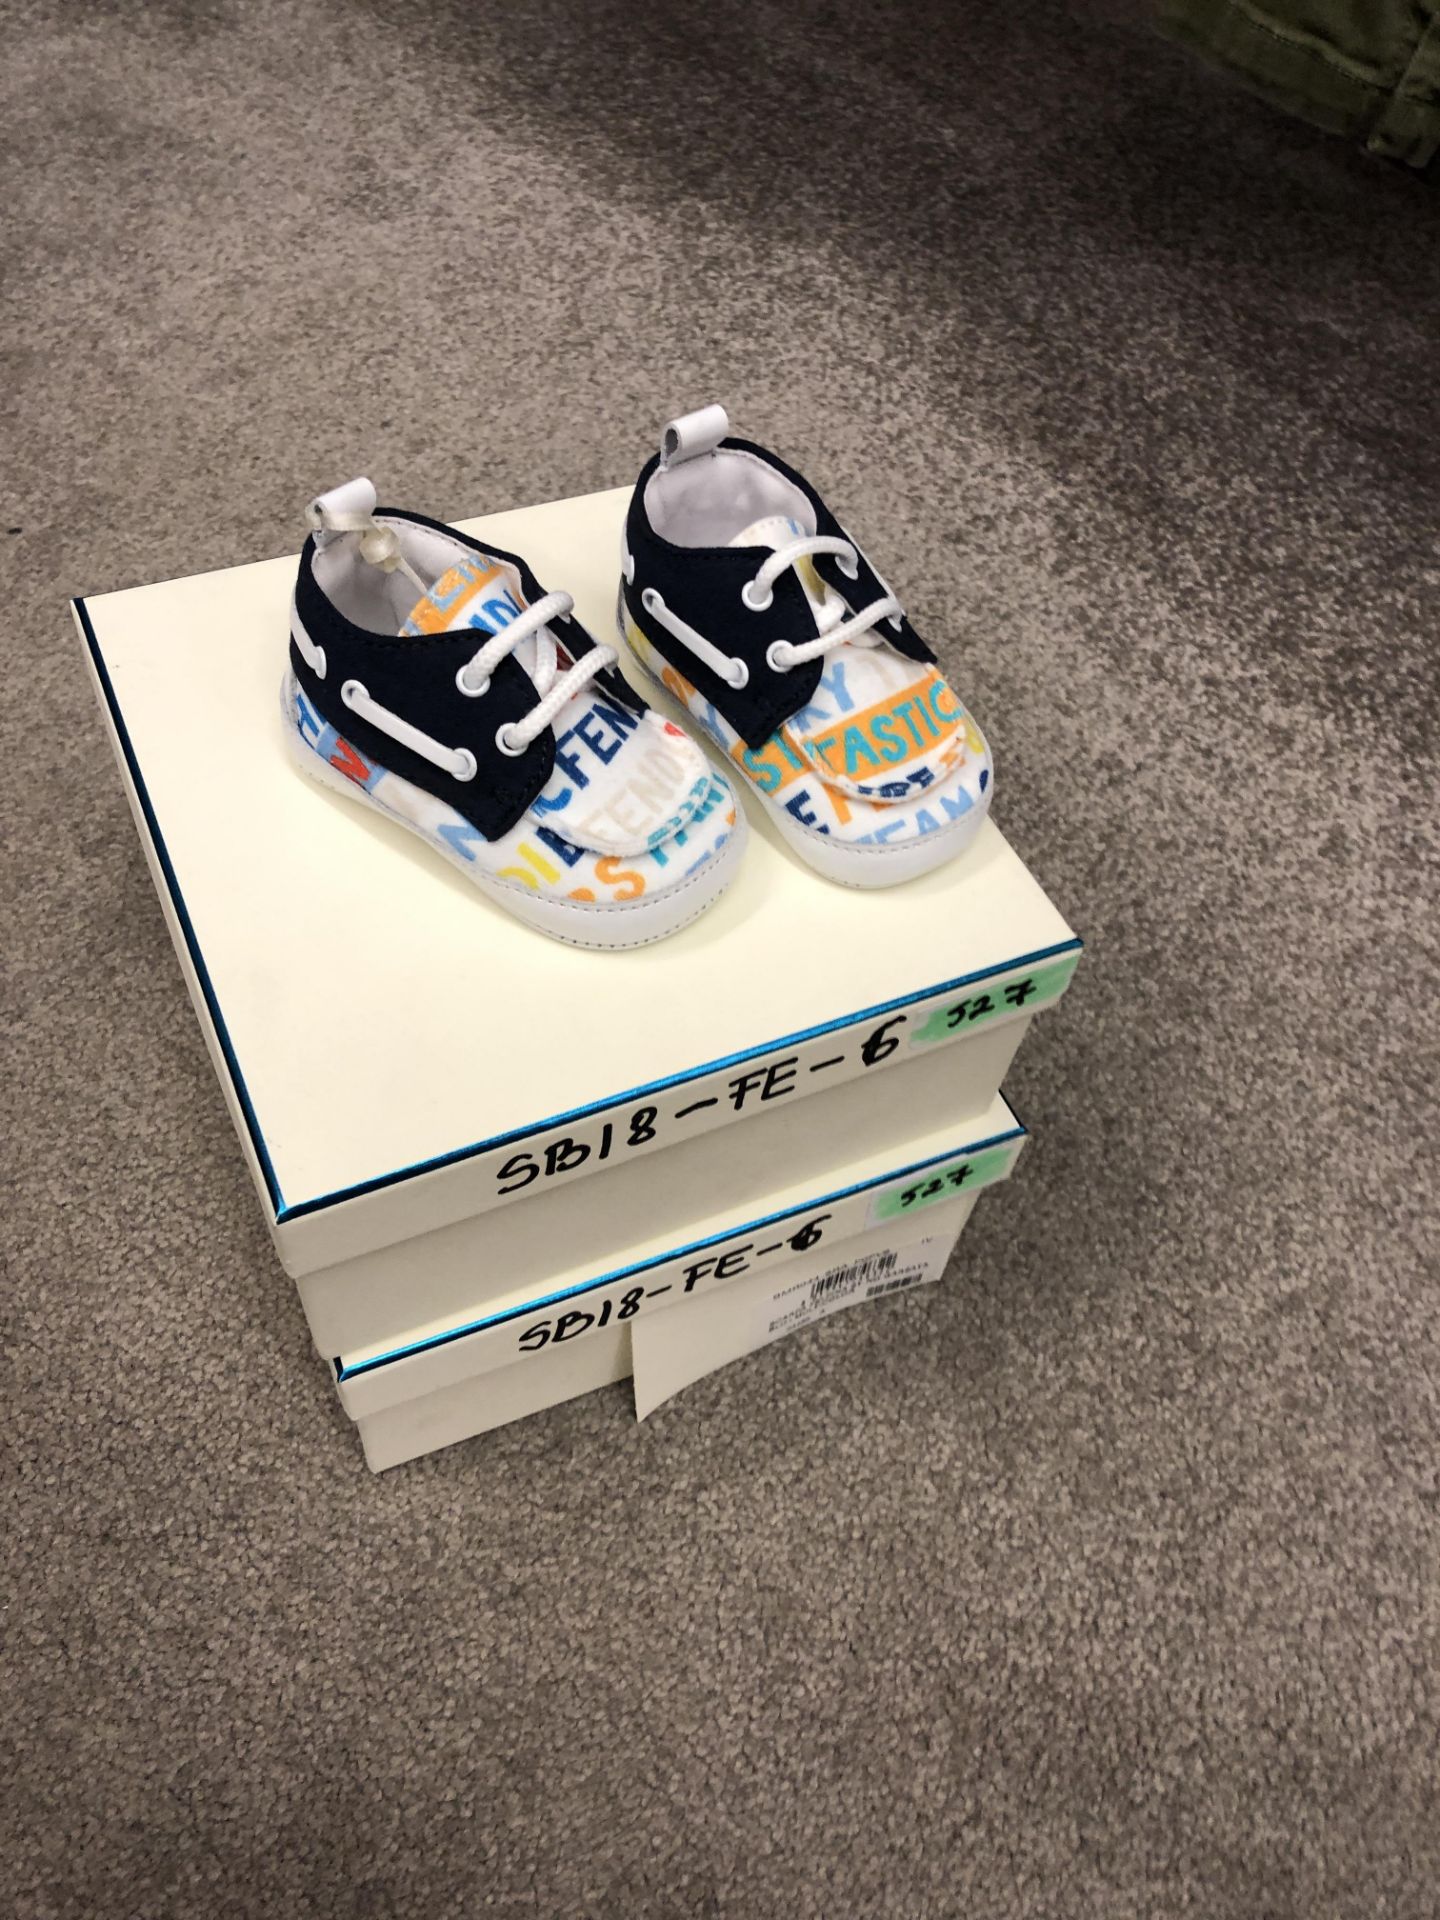 Box 15 6 Pairs: Fendi Childrens Shoe Style 270. Size 24 -34 1 Pair: Fendi Childrens Shoe Style - Image 7 of 13